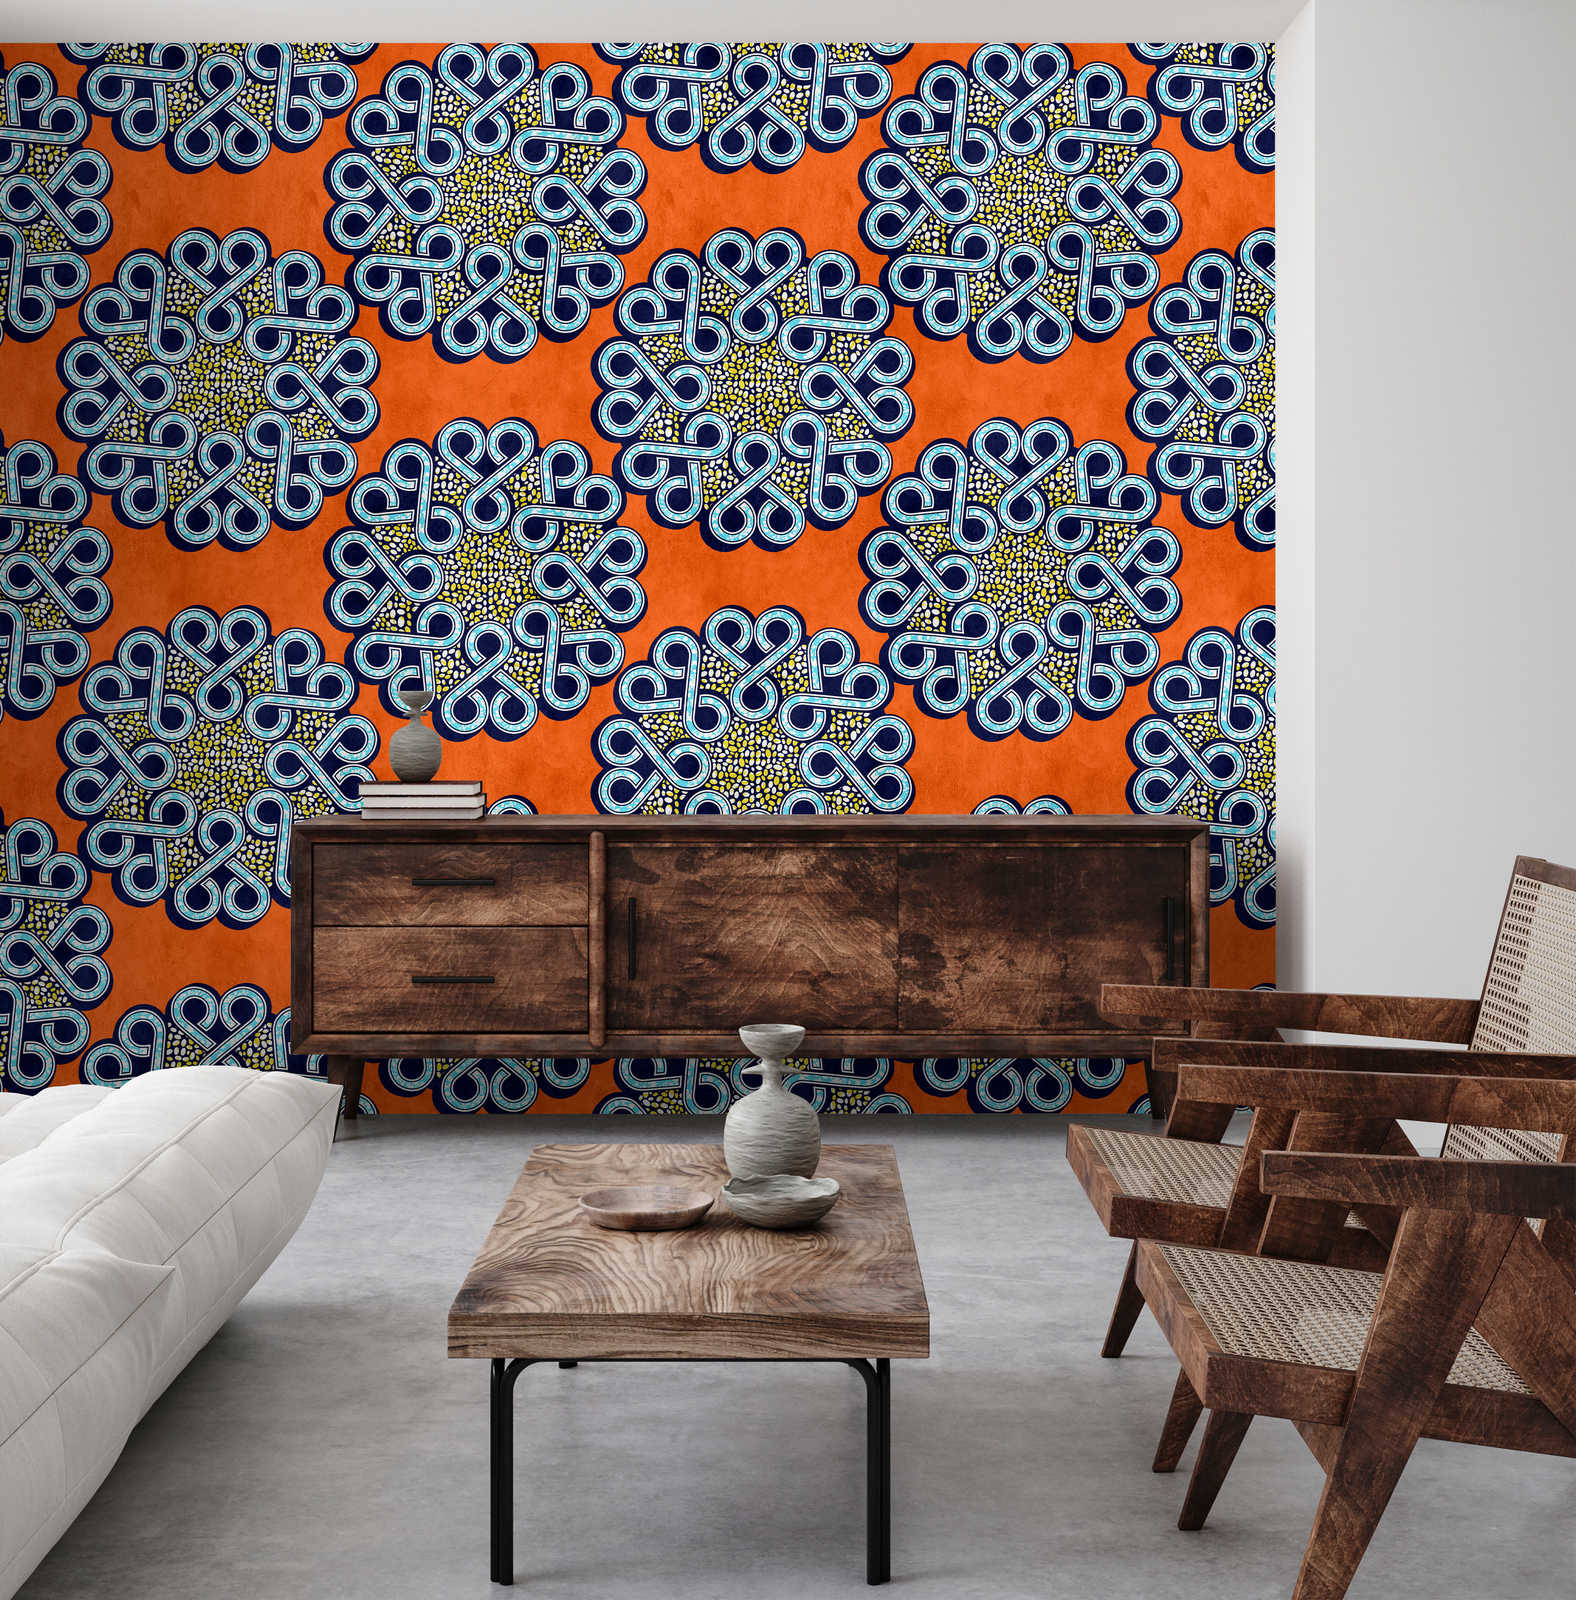             Dakar 2 - Aftican photo wallpaper wax fabric pattern Orange, Blue
        